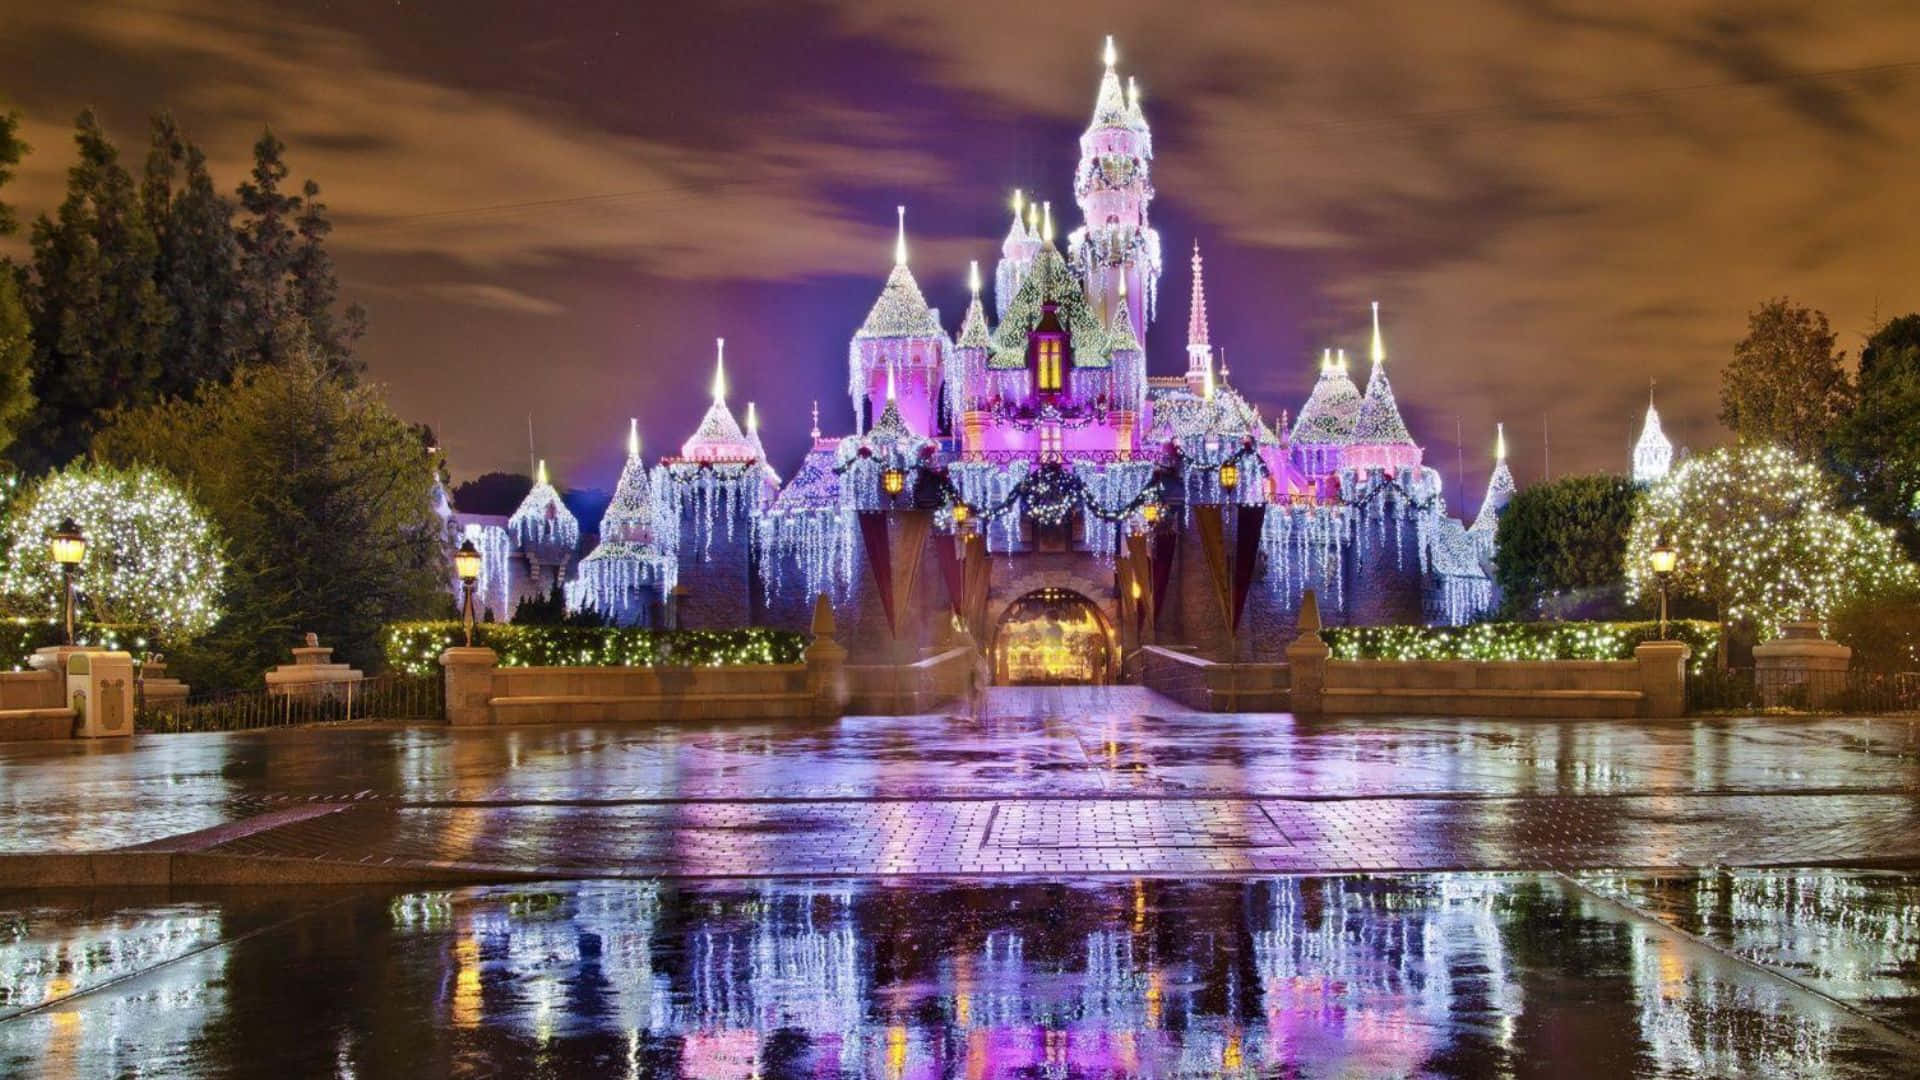 Enjoy a magical day at Disneyland